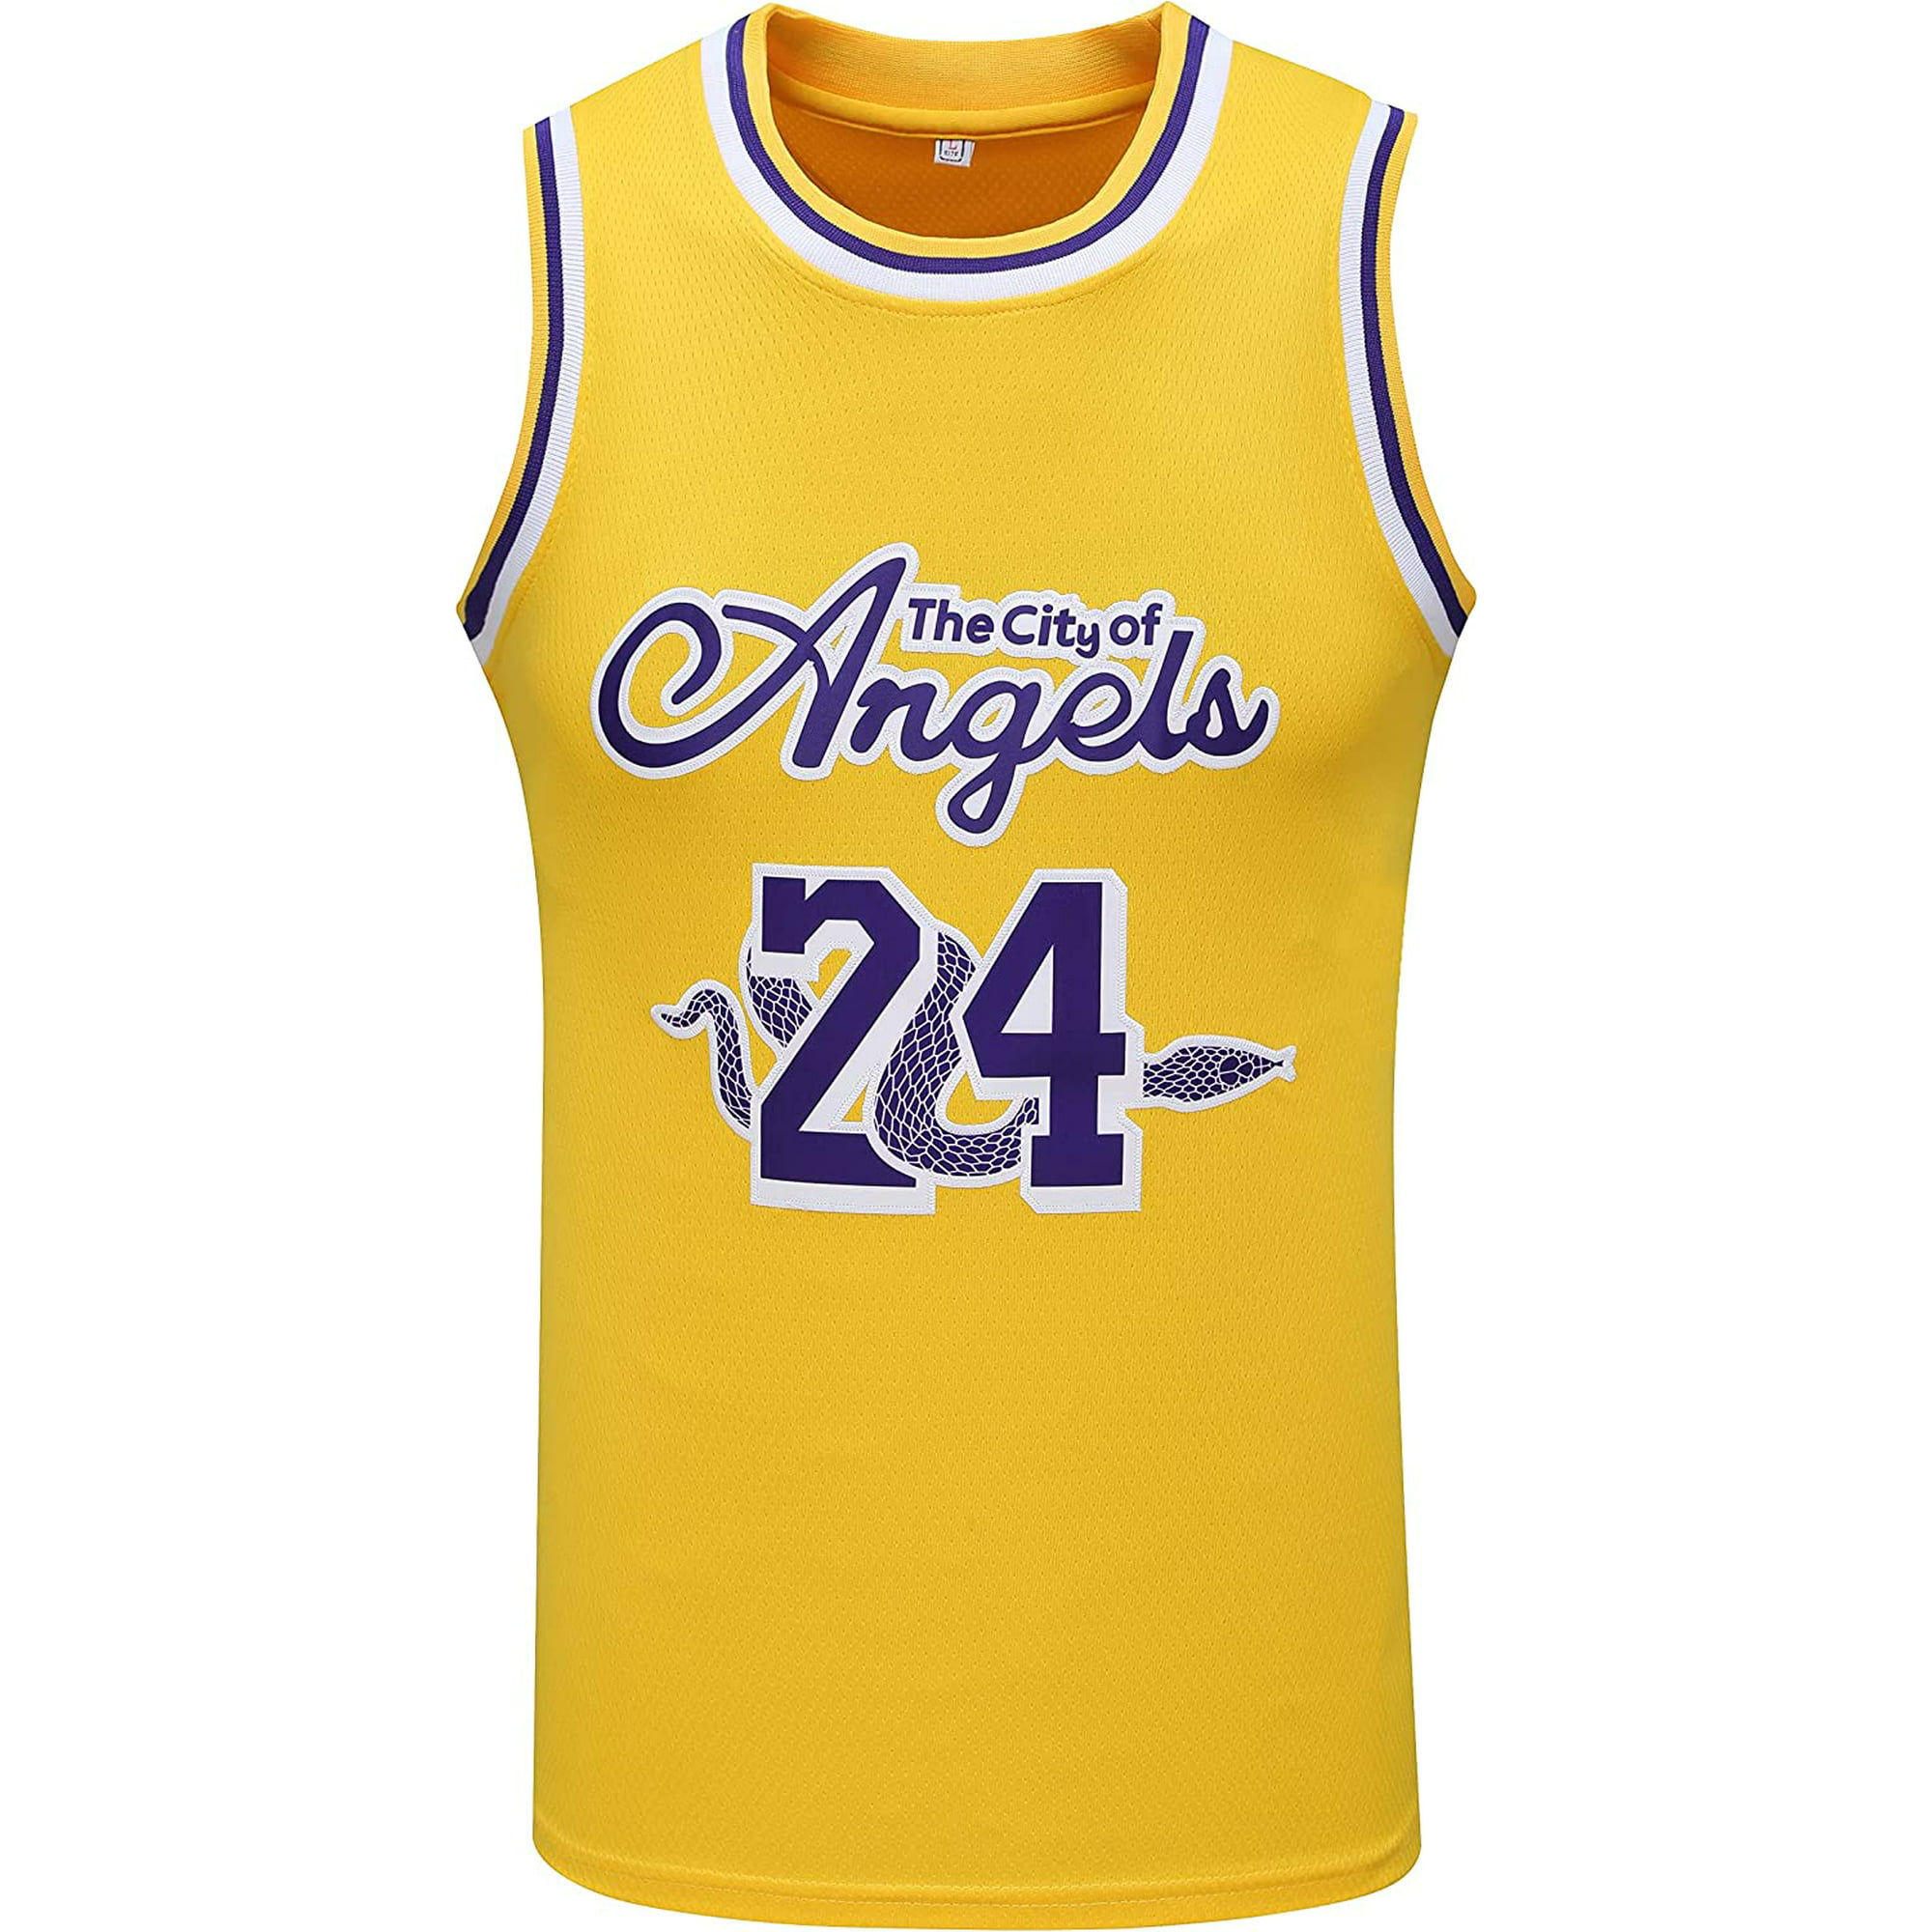 Men's Basketball Jersey,#24 Basketball Jersey Shirts,Breathable